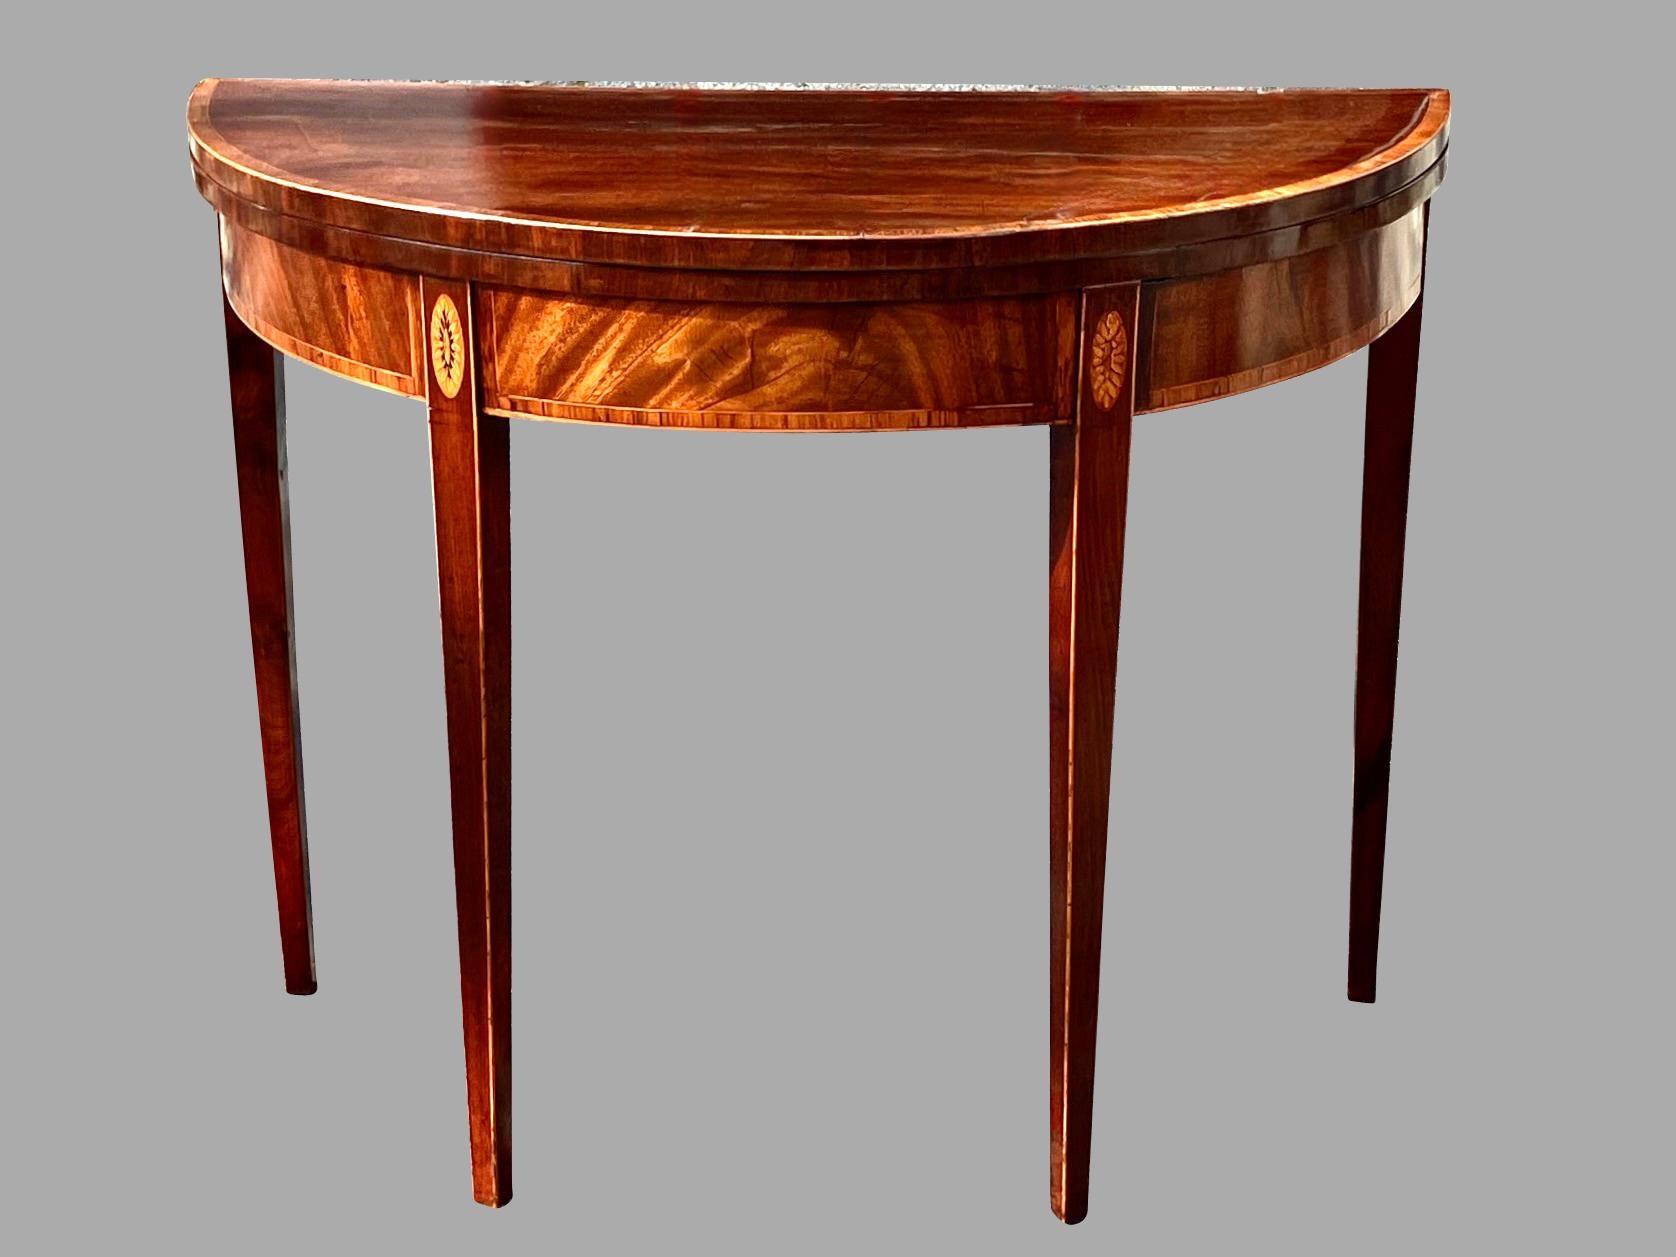 18th Century English Hepplewhite Satinwood Inlaid Mahogany Demilune Games Table Circa 1790 For Sale